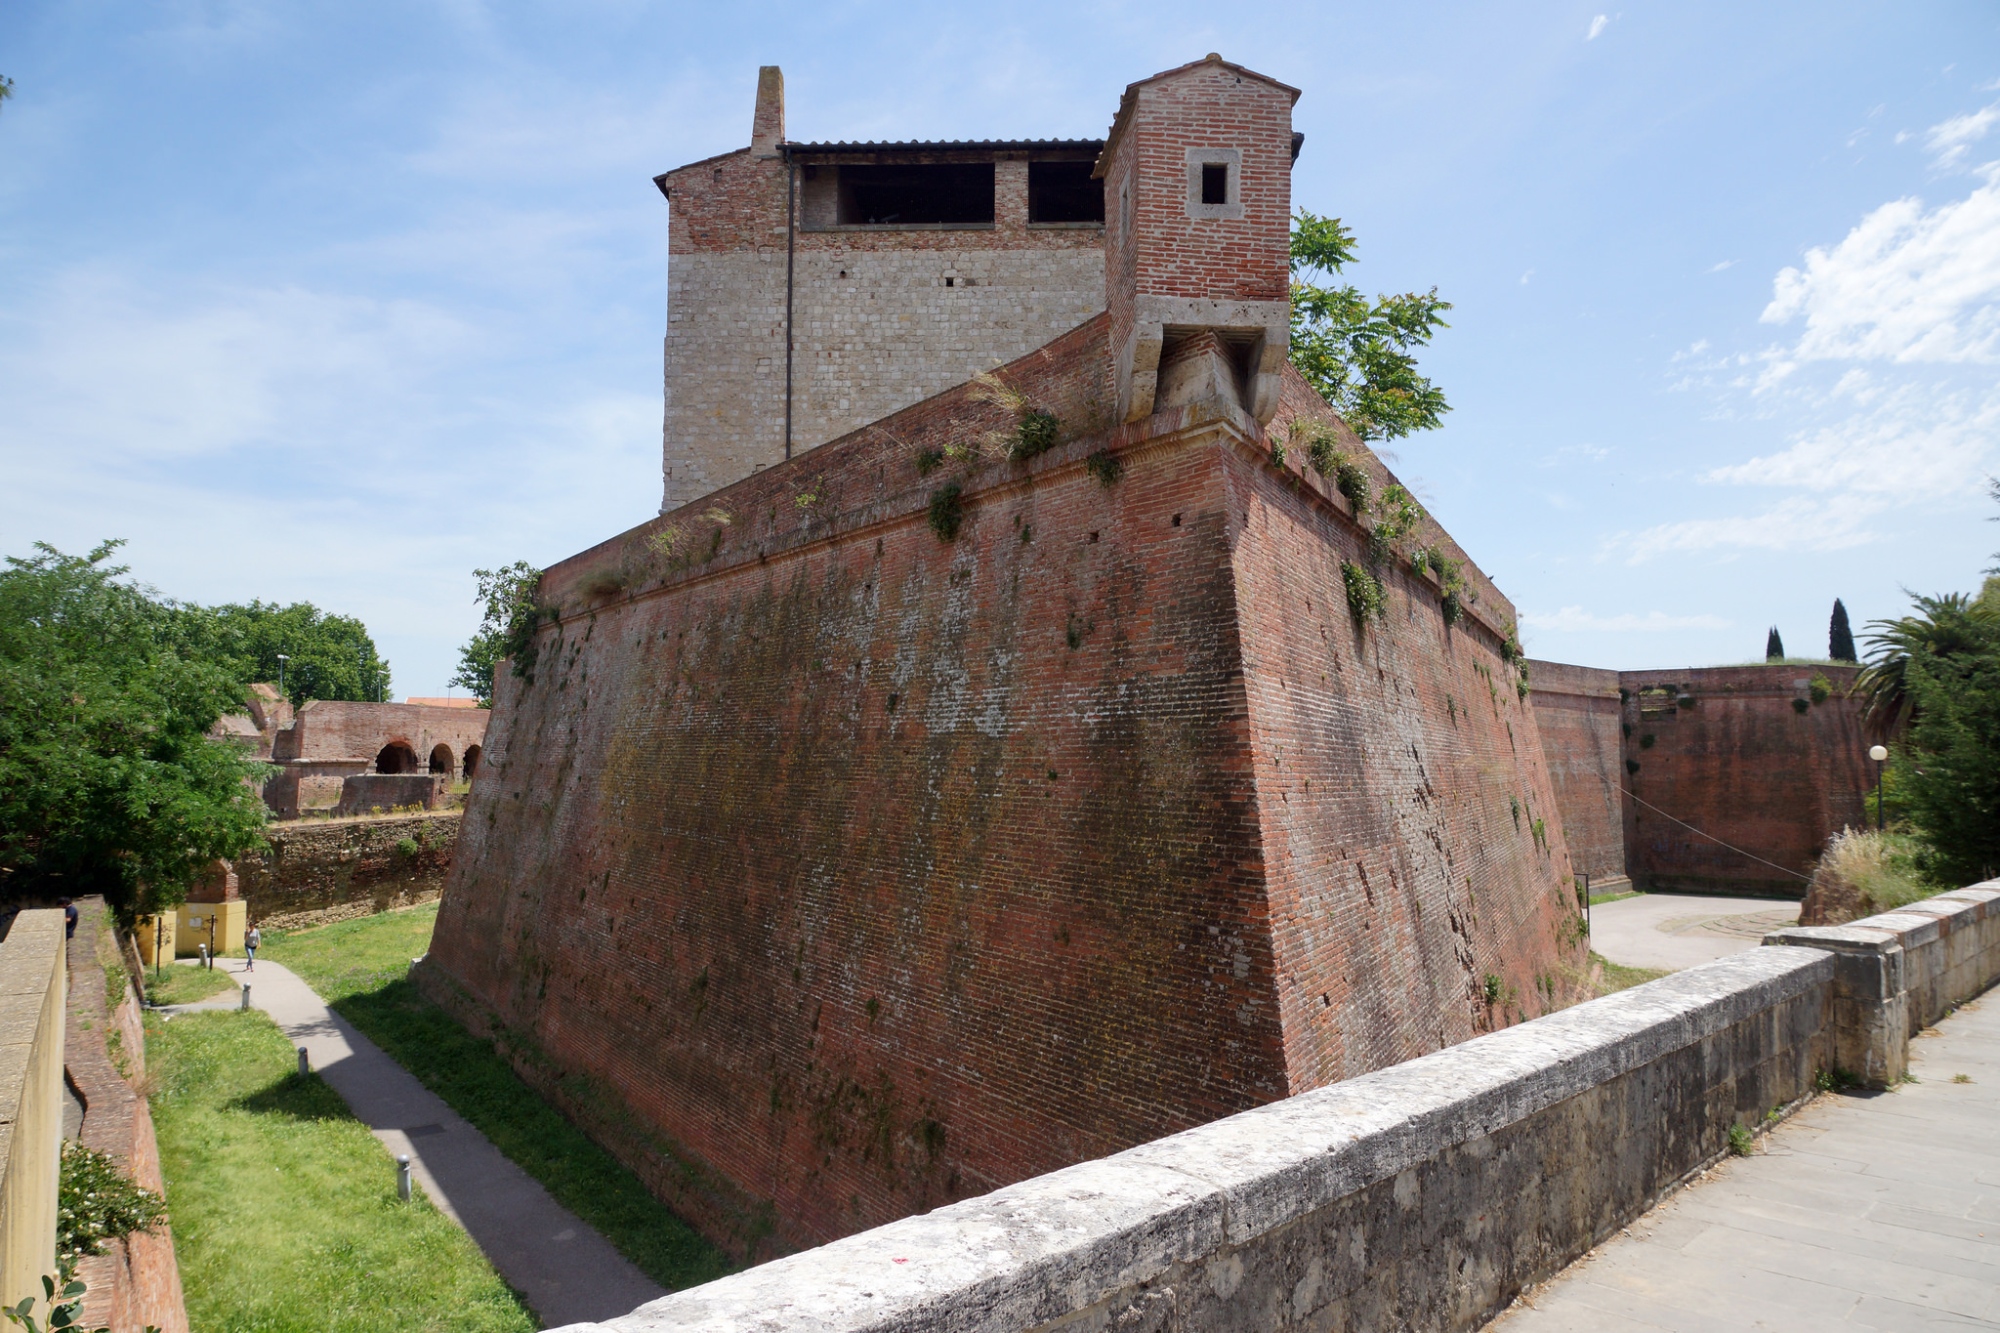 The walls of Grosseto